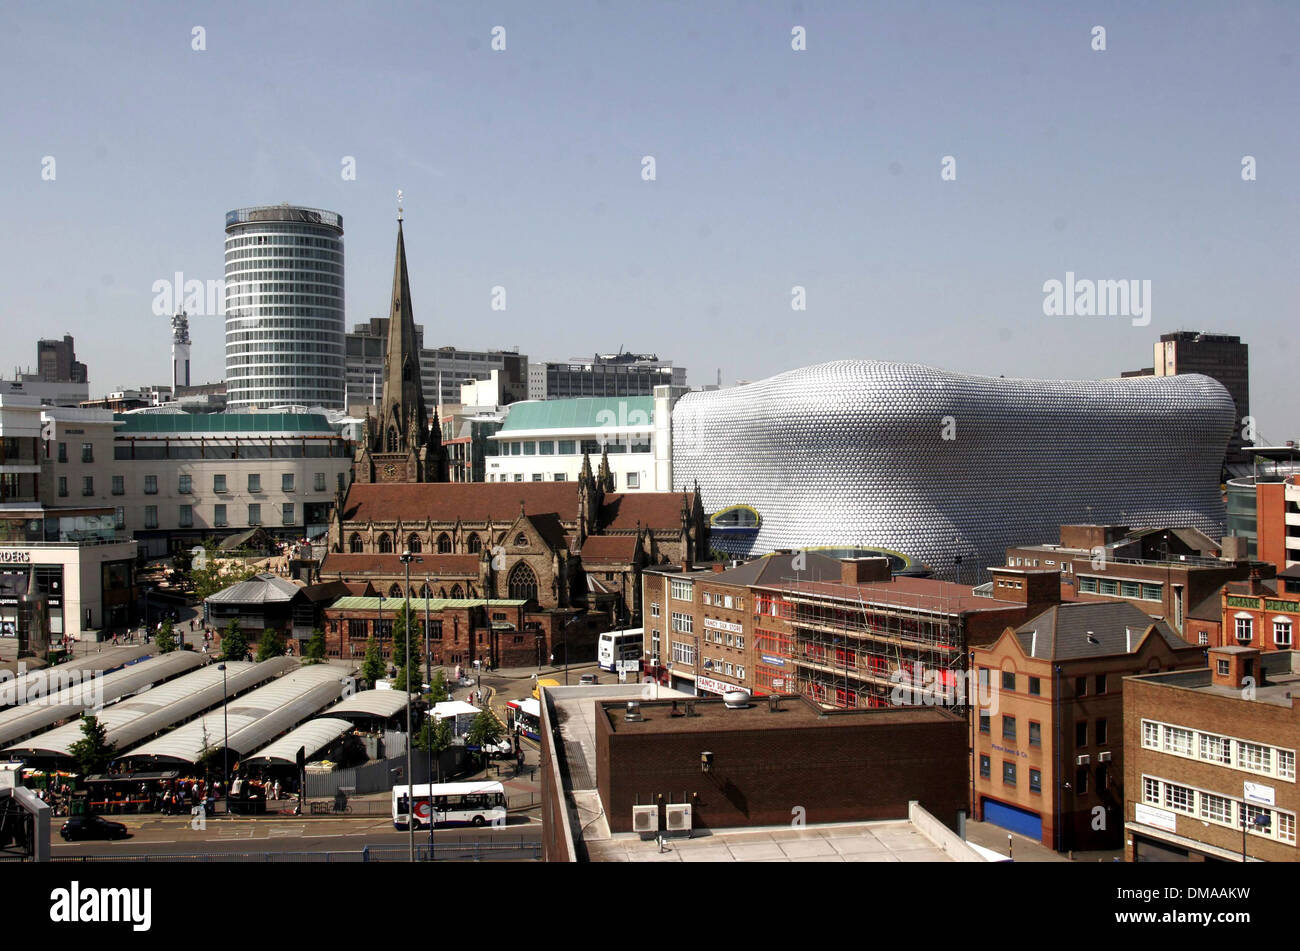 The Birmingham city centre skyline. Stock Photo